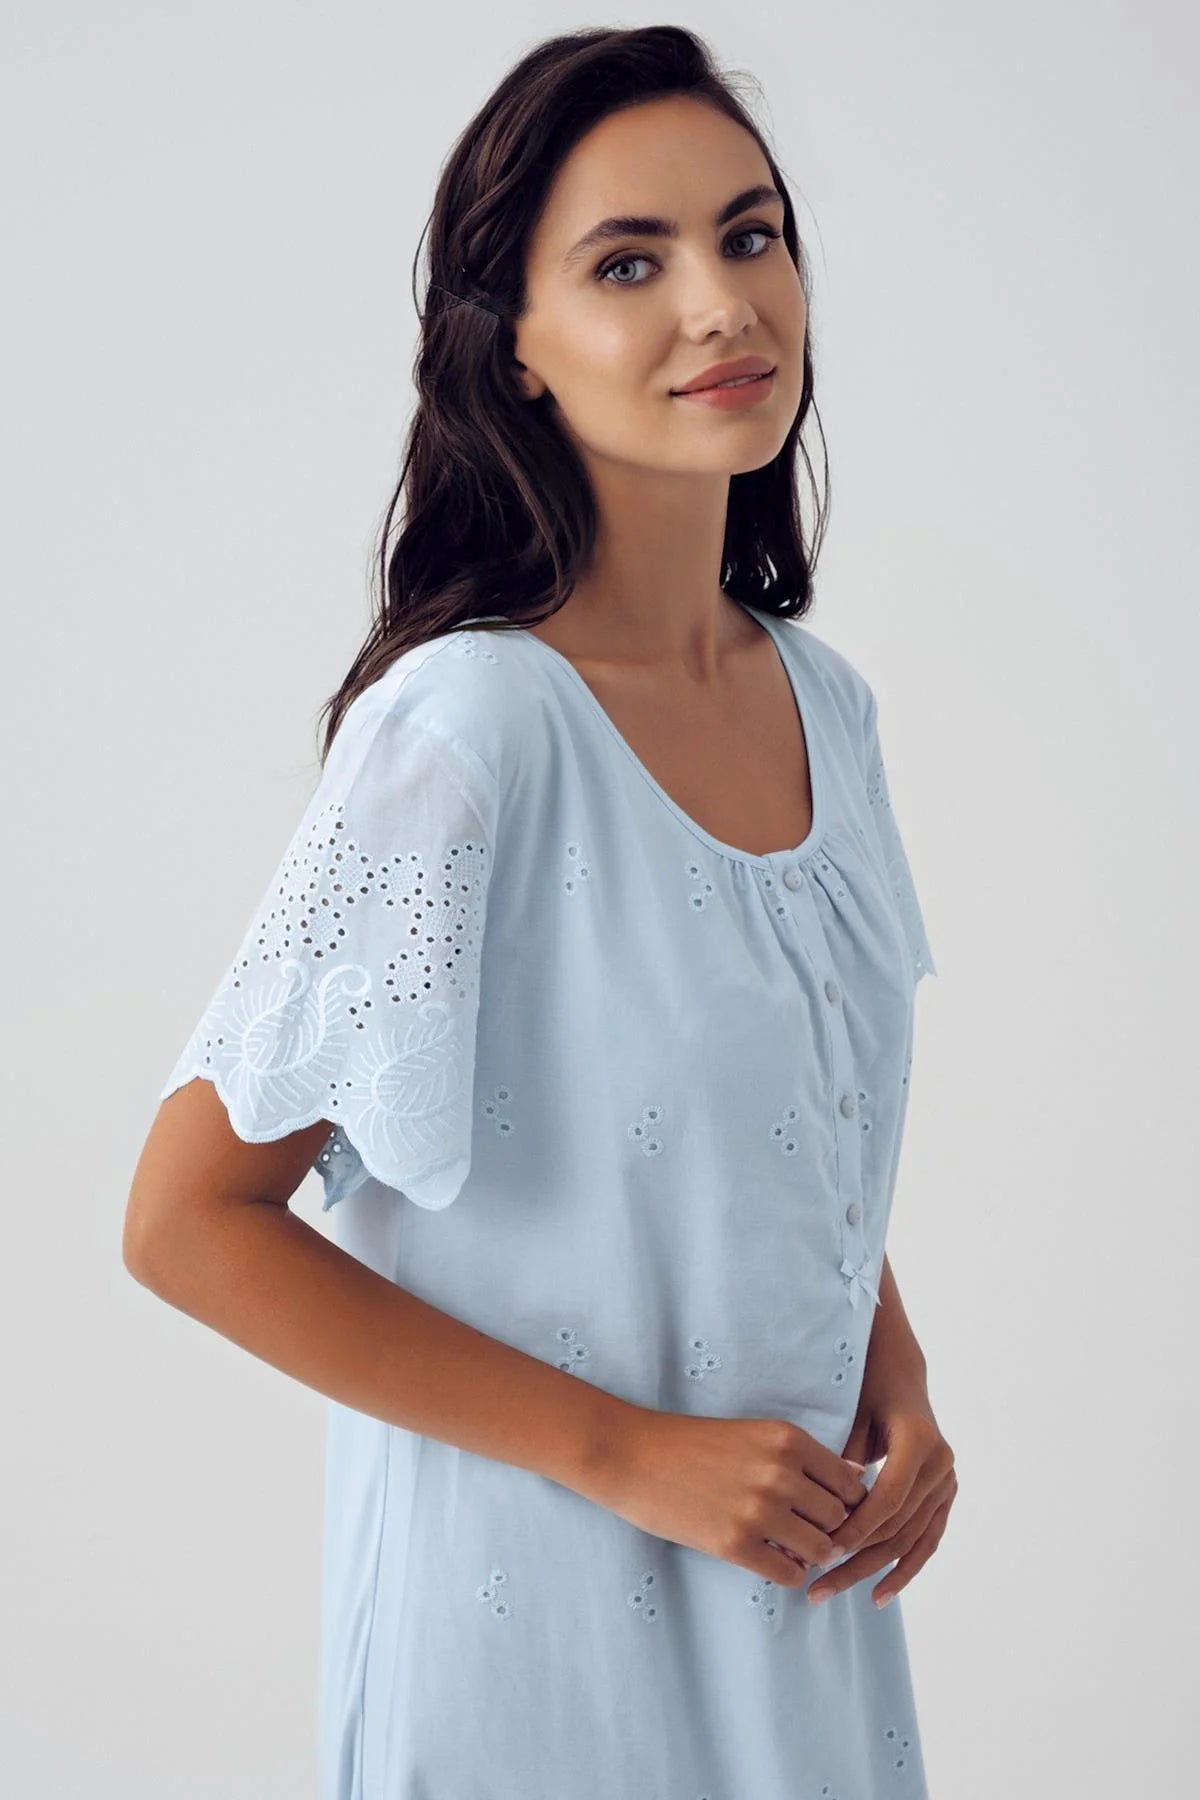 Shopymommy 10117 Woven Maternity & Nursing Nightgown Blue